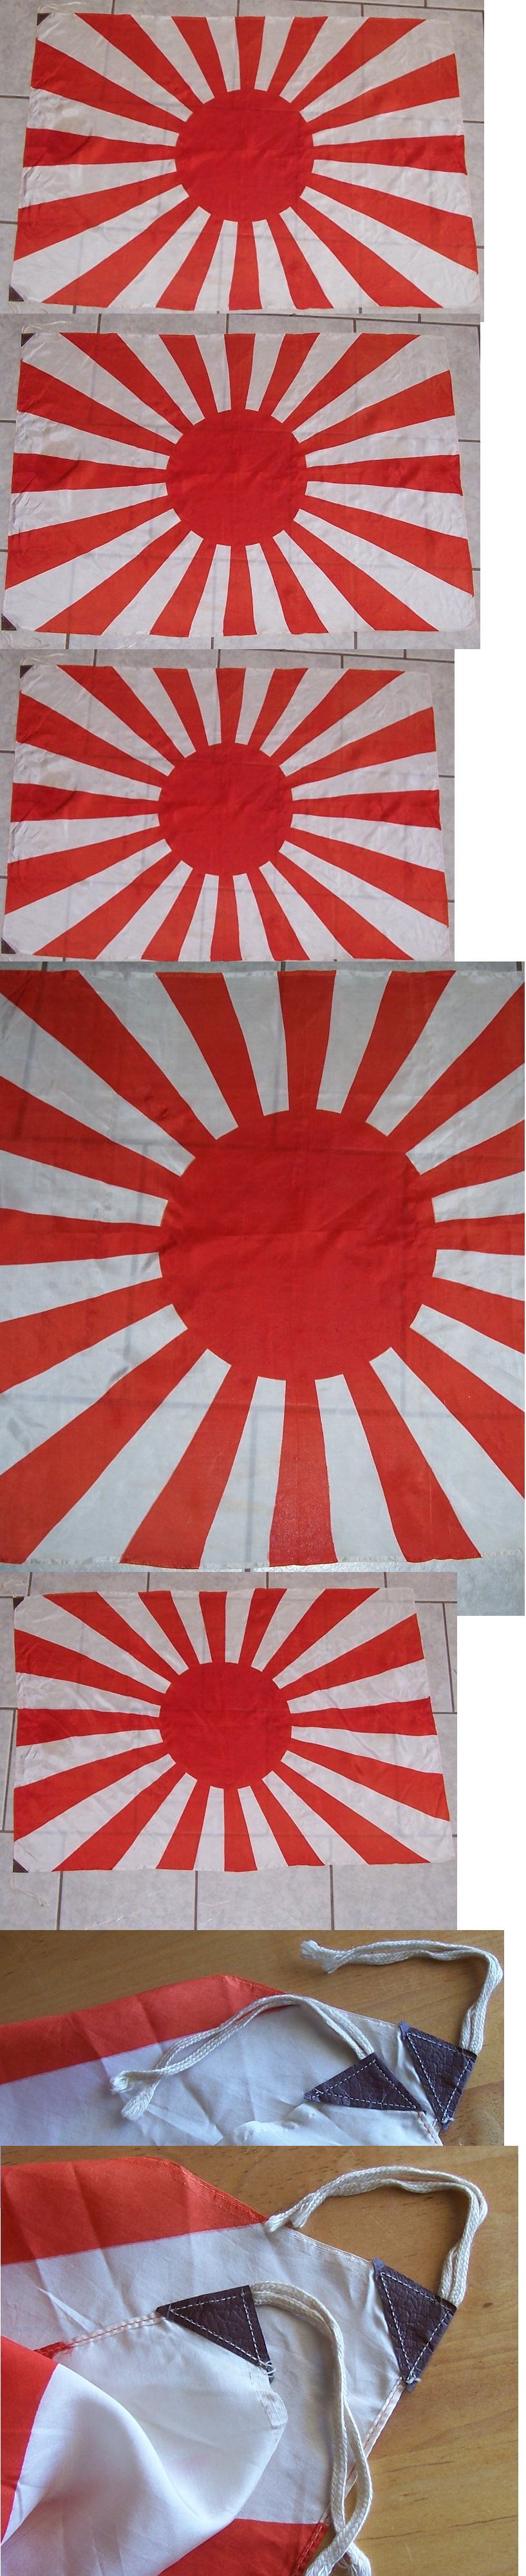 Japanese Army Battle Flag 